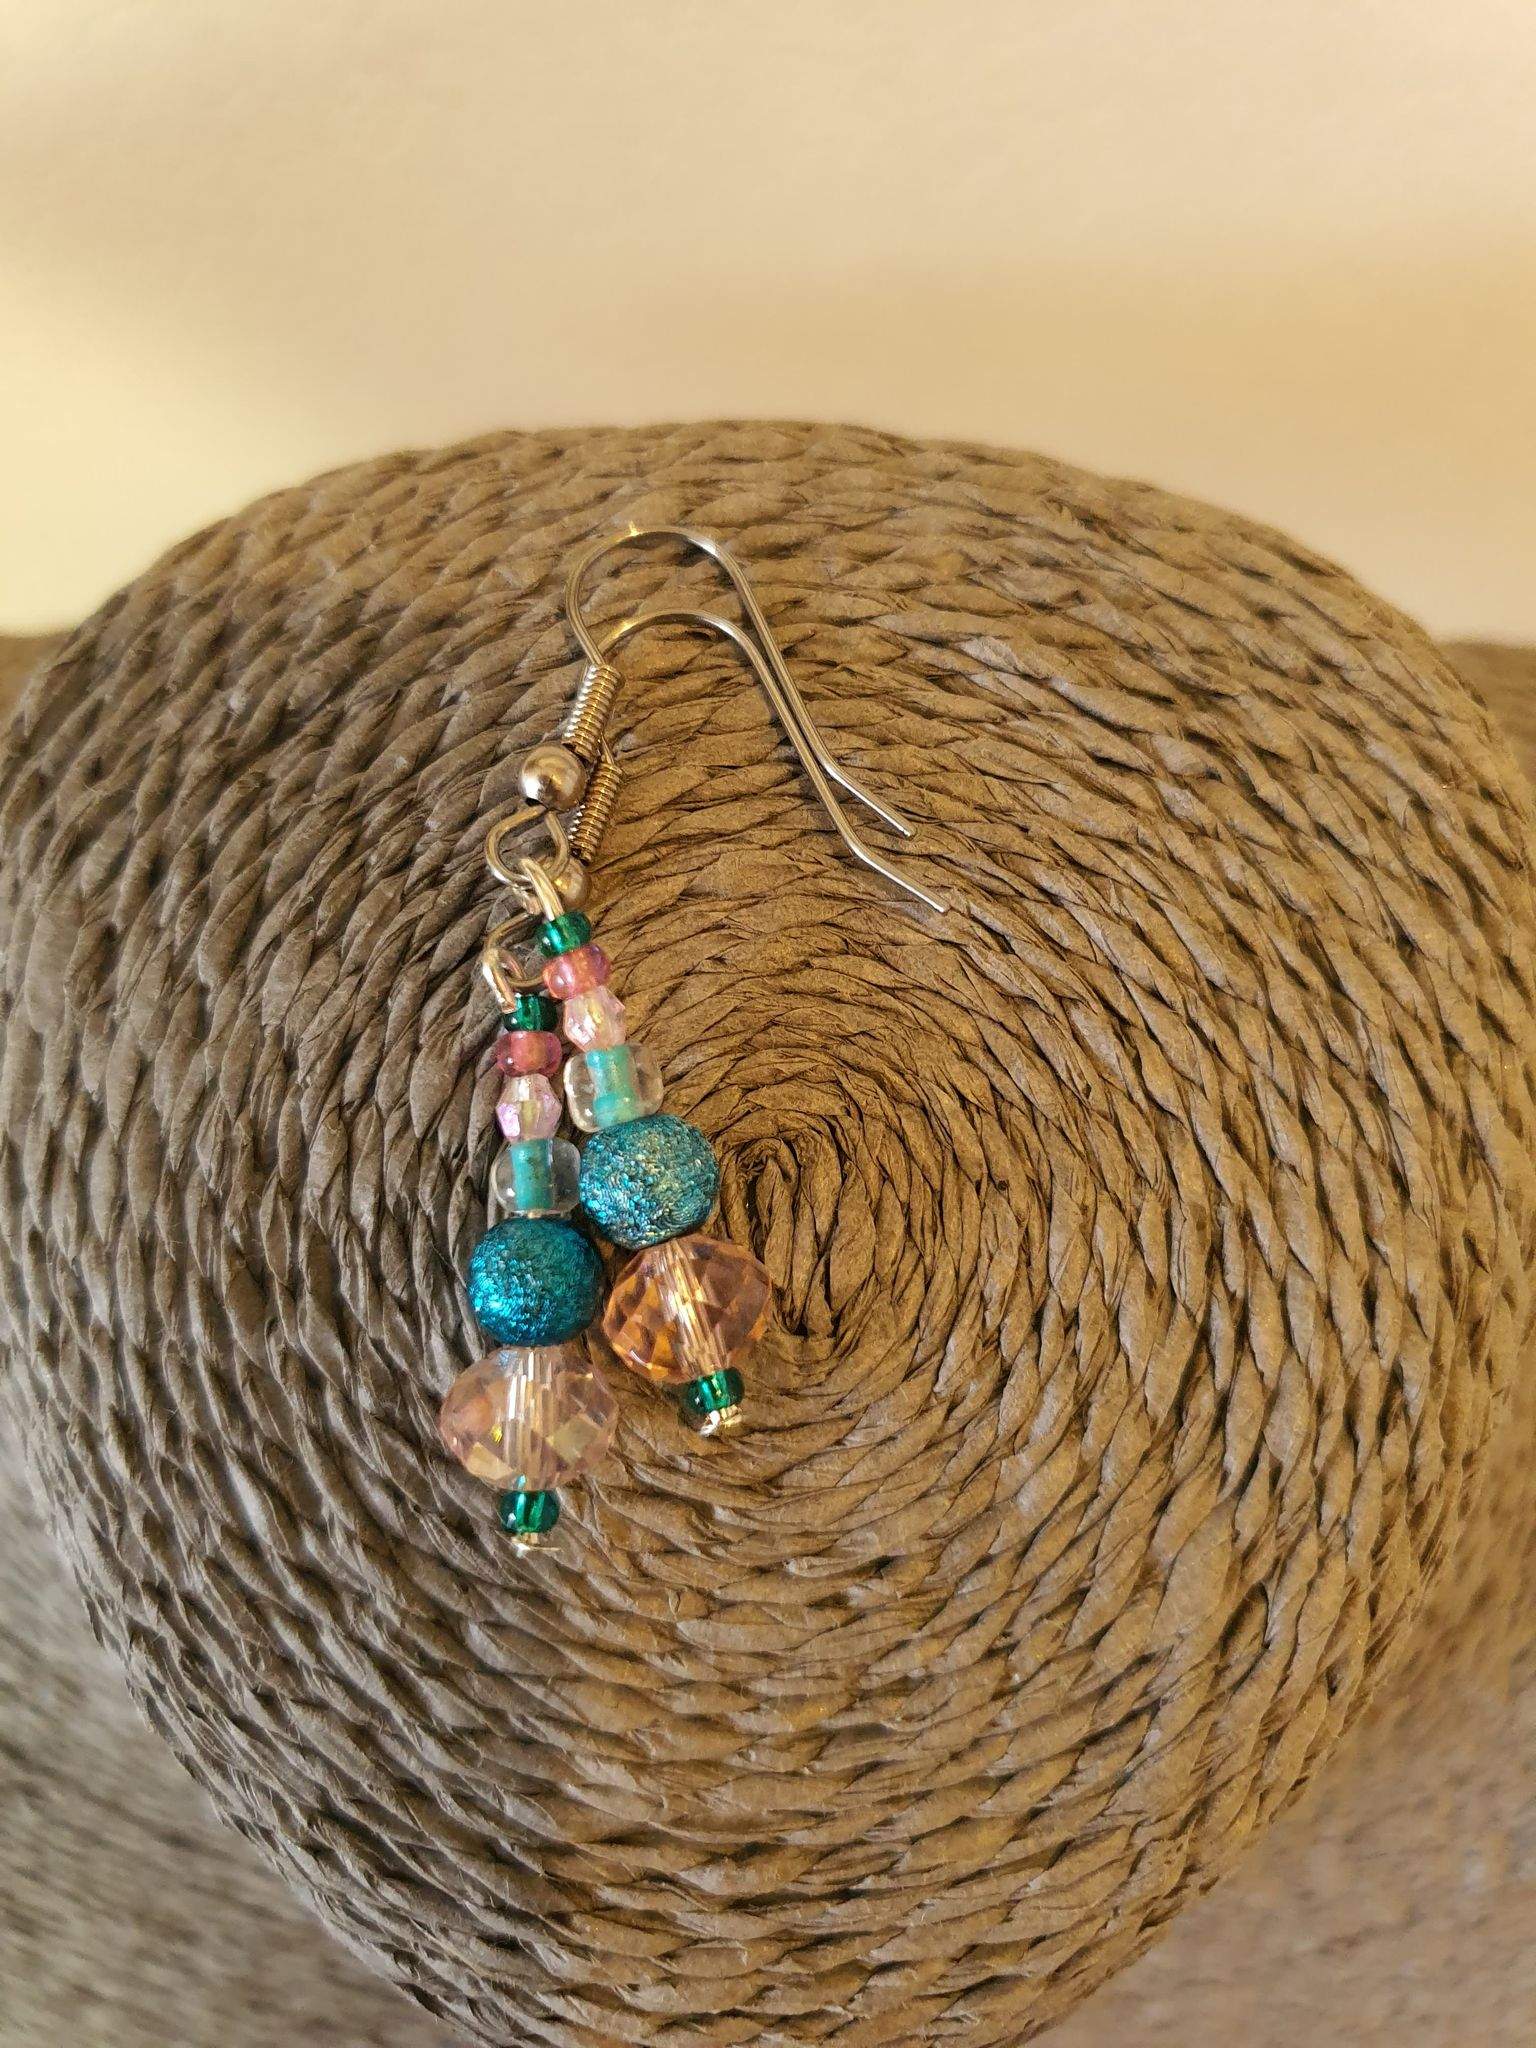 Bespoke alpaca necklace and earring set